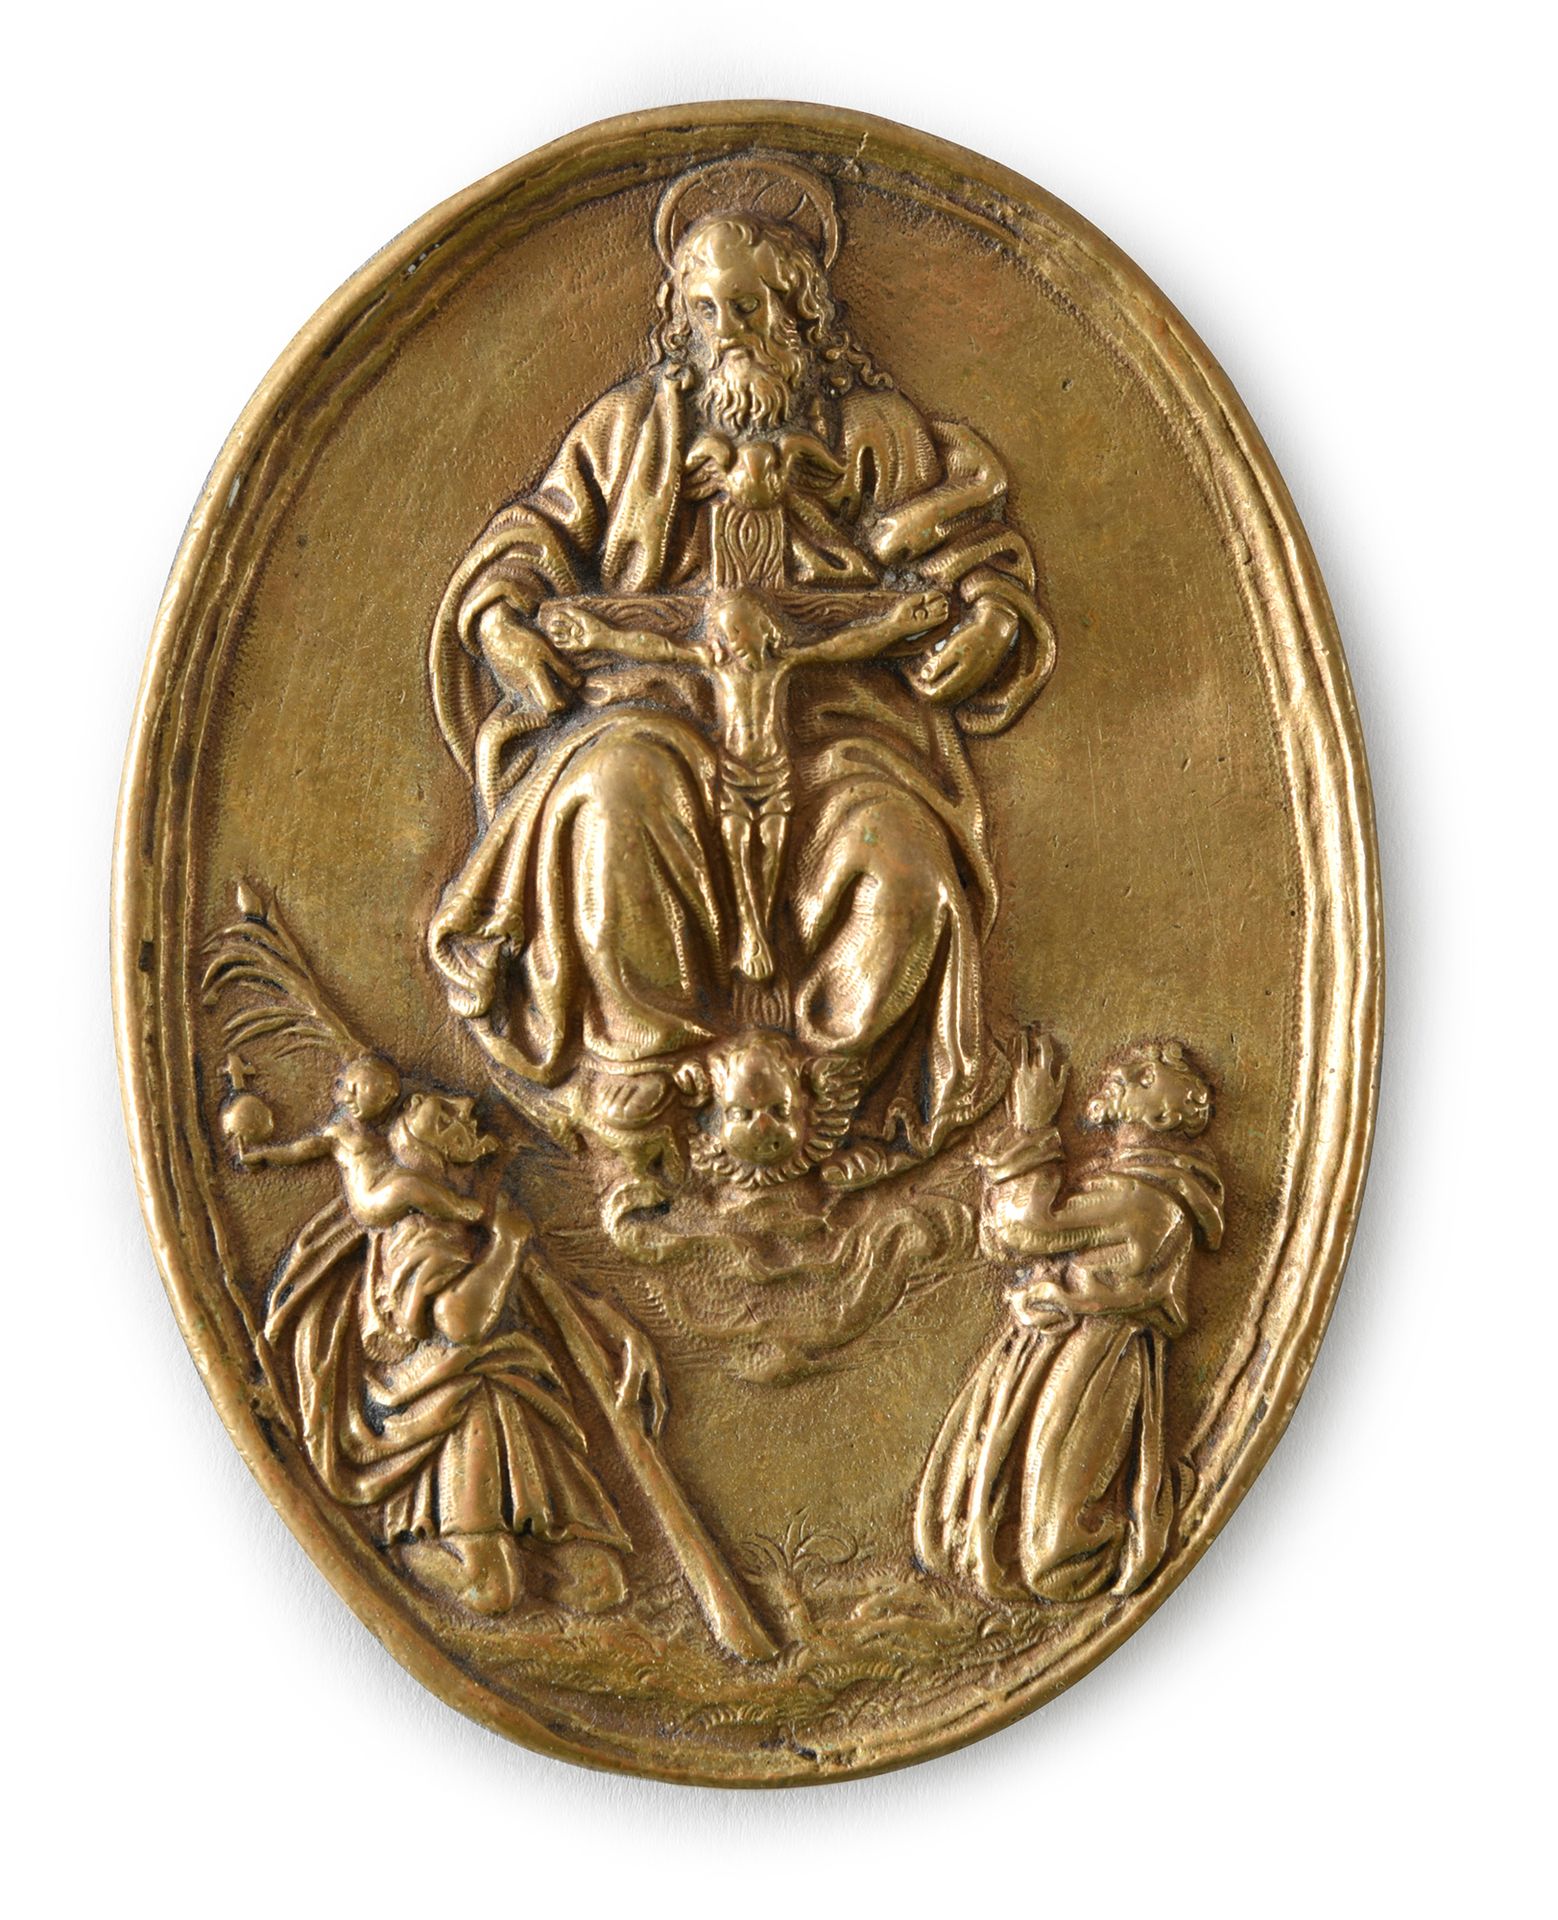 Espagne, début du XVIIe siècle 
Placa pectoral ovalada de bronce que representa &hellip;